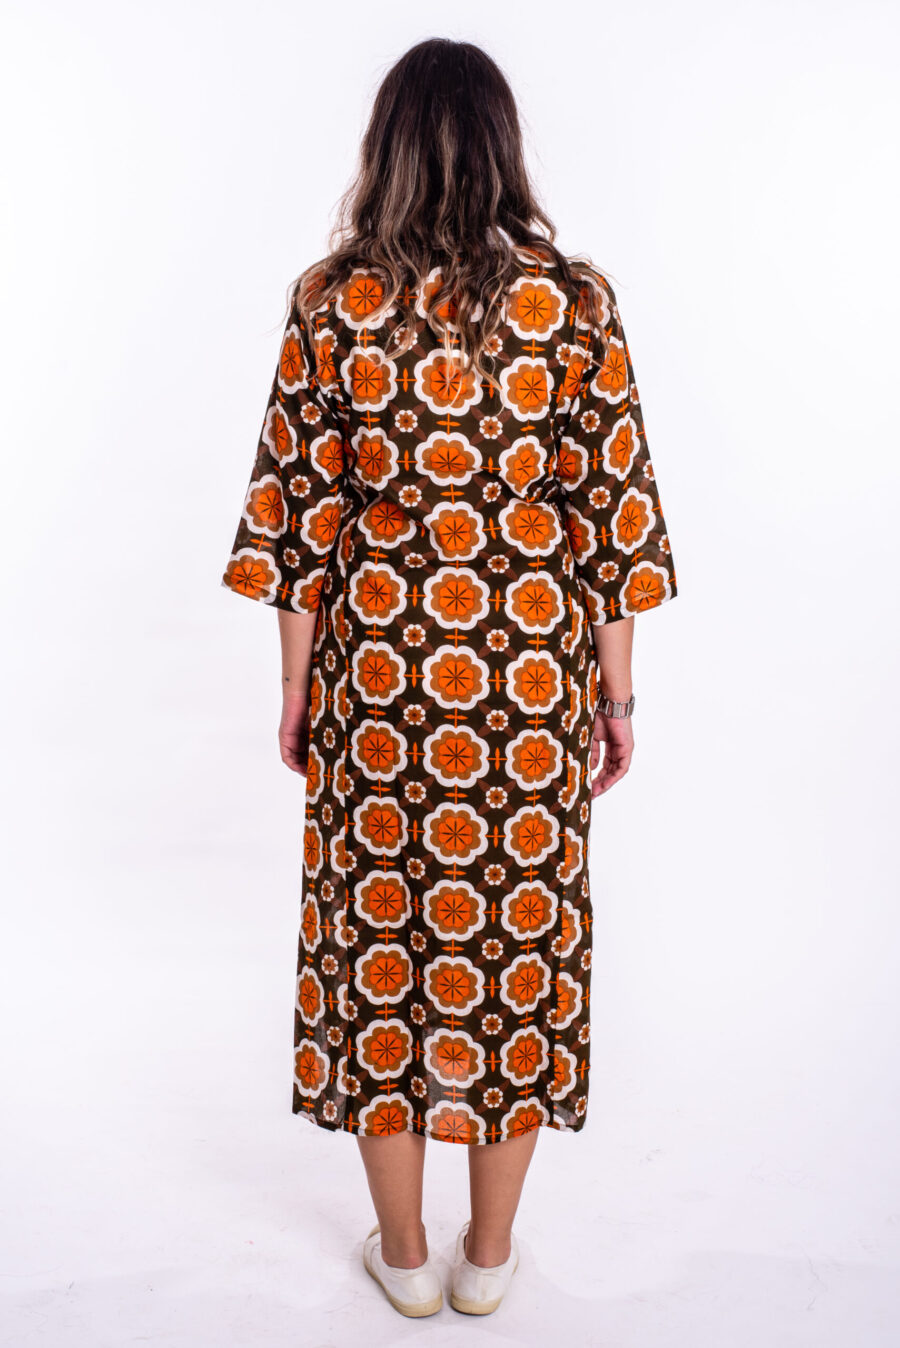 Jalabiya dress | Uniquely designed dress – raving retro print by comfort zone boutique